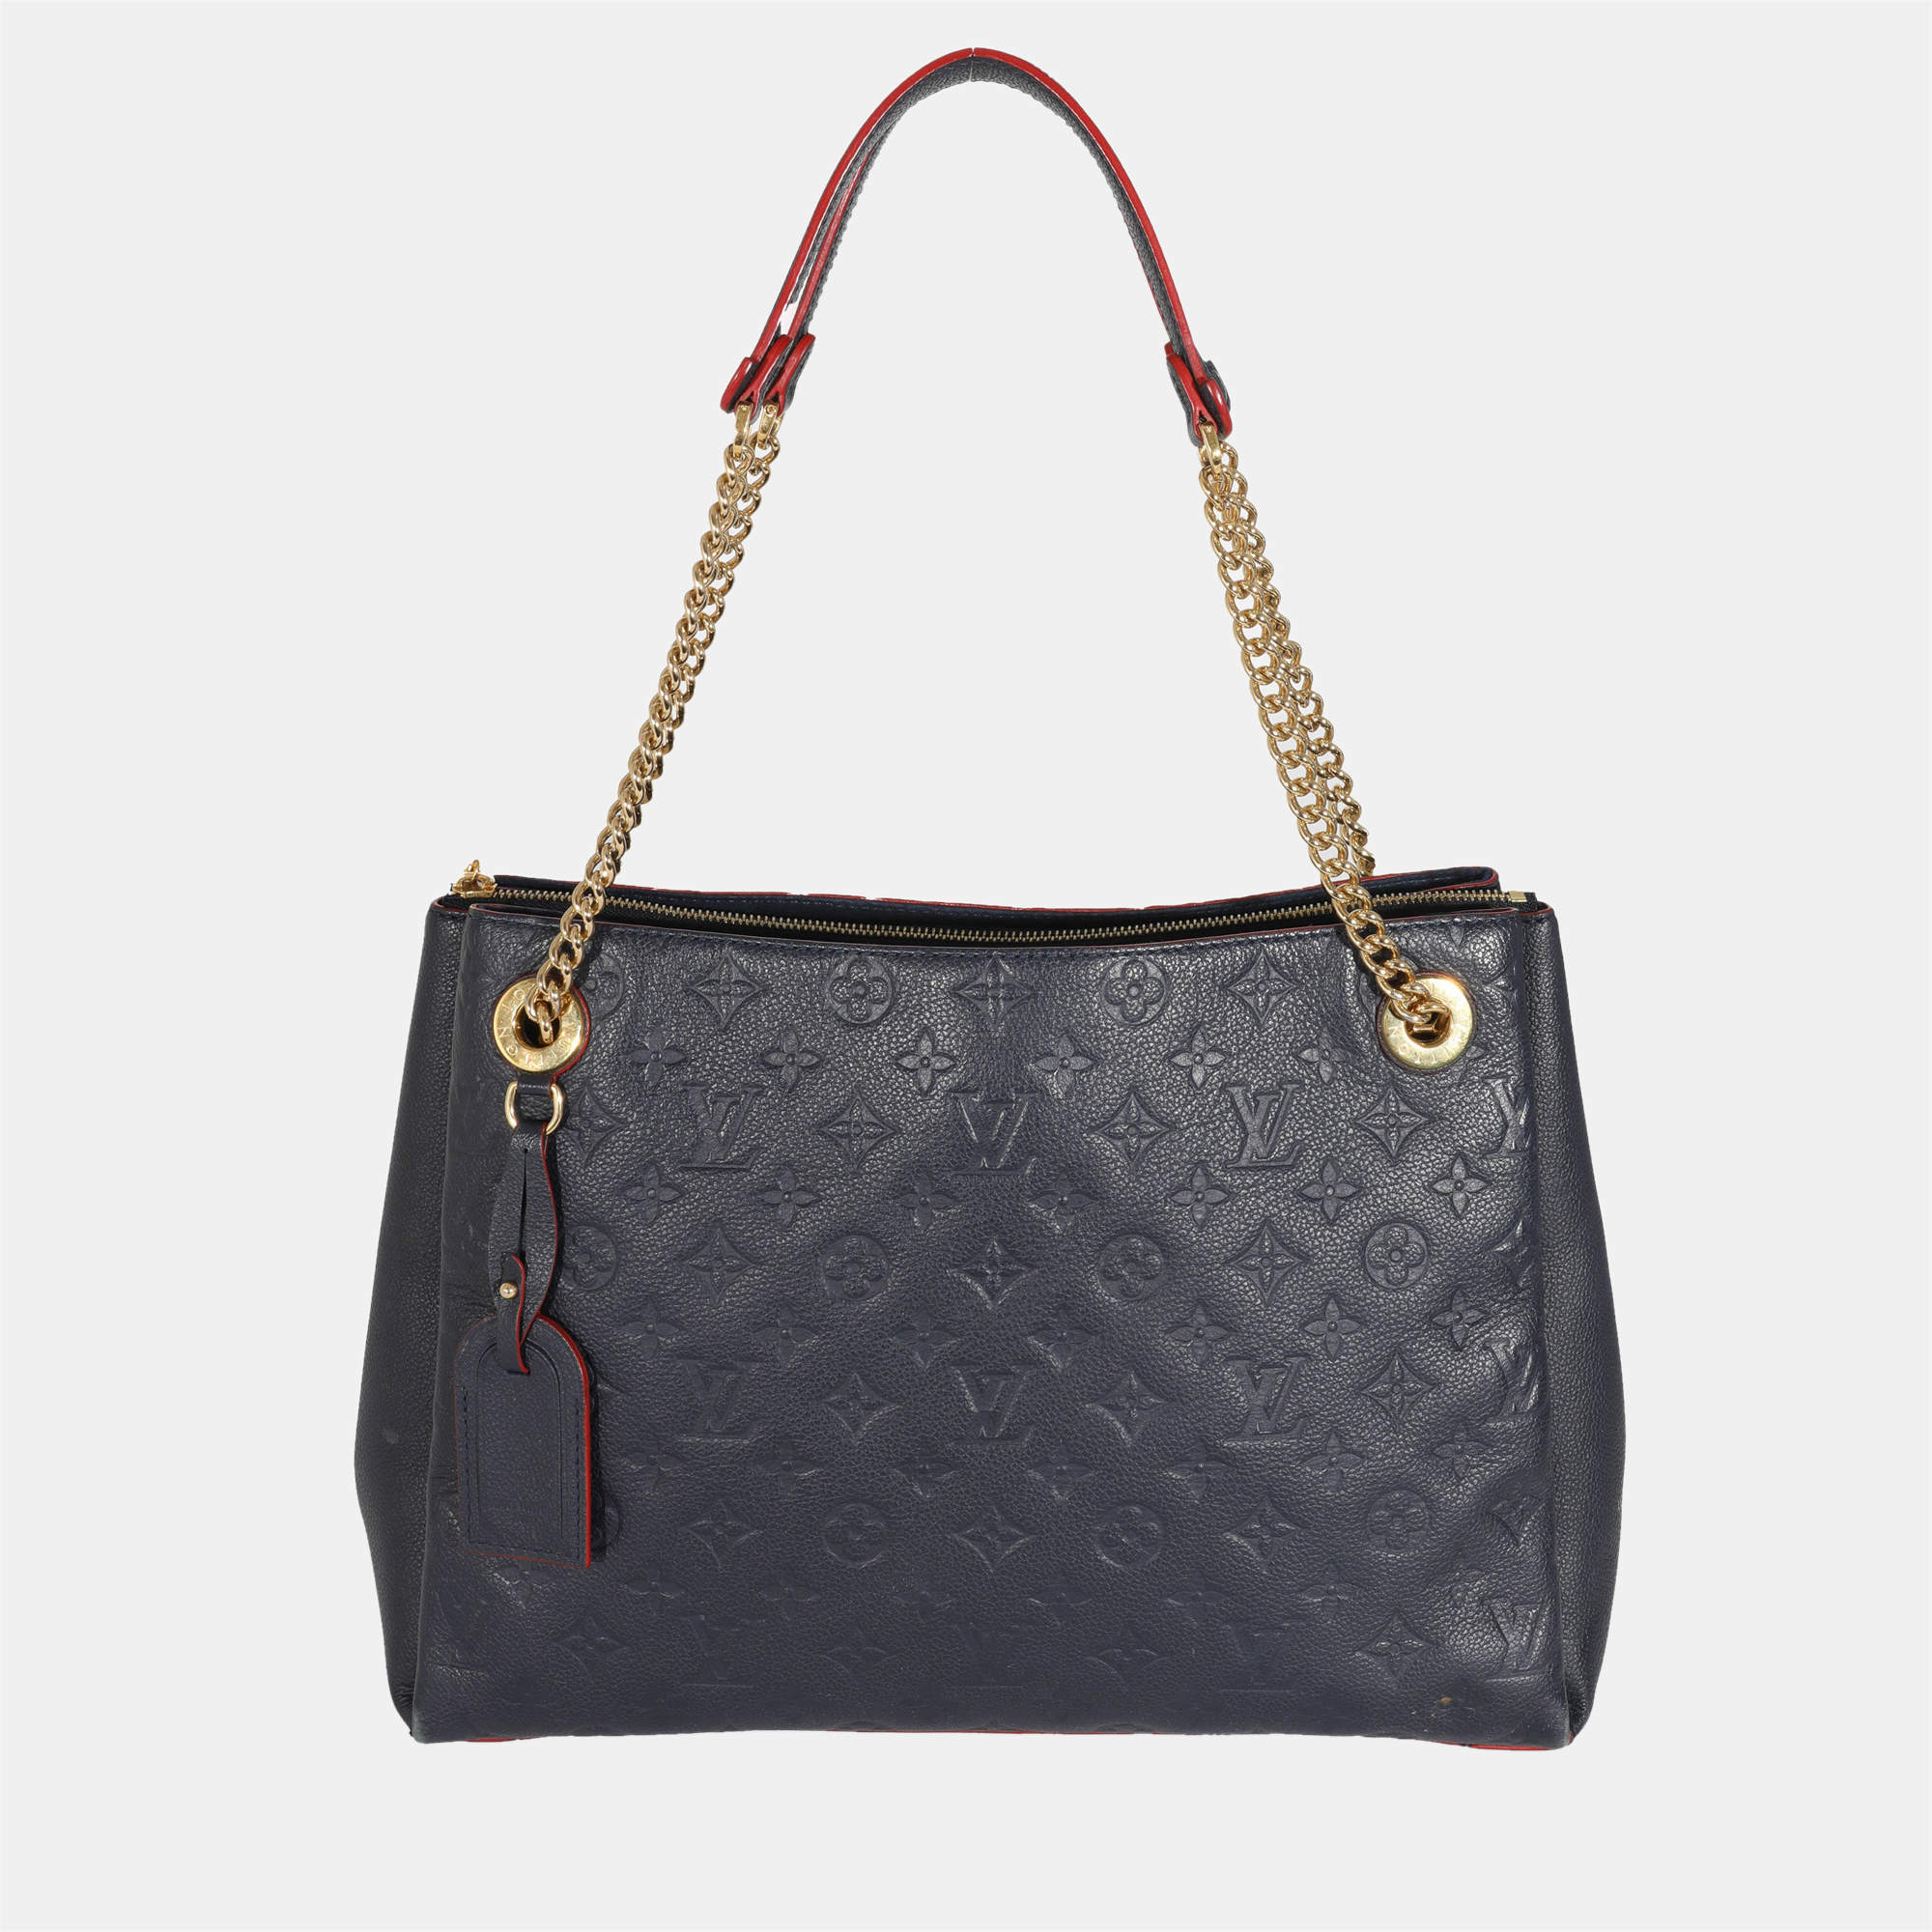 Louis Vuitton, Bags, Im Selling This New Surne Mm Louis Vuitton Bag